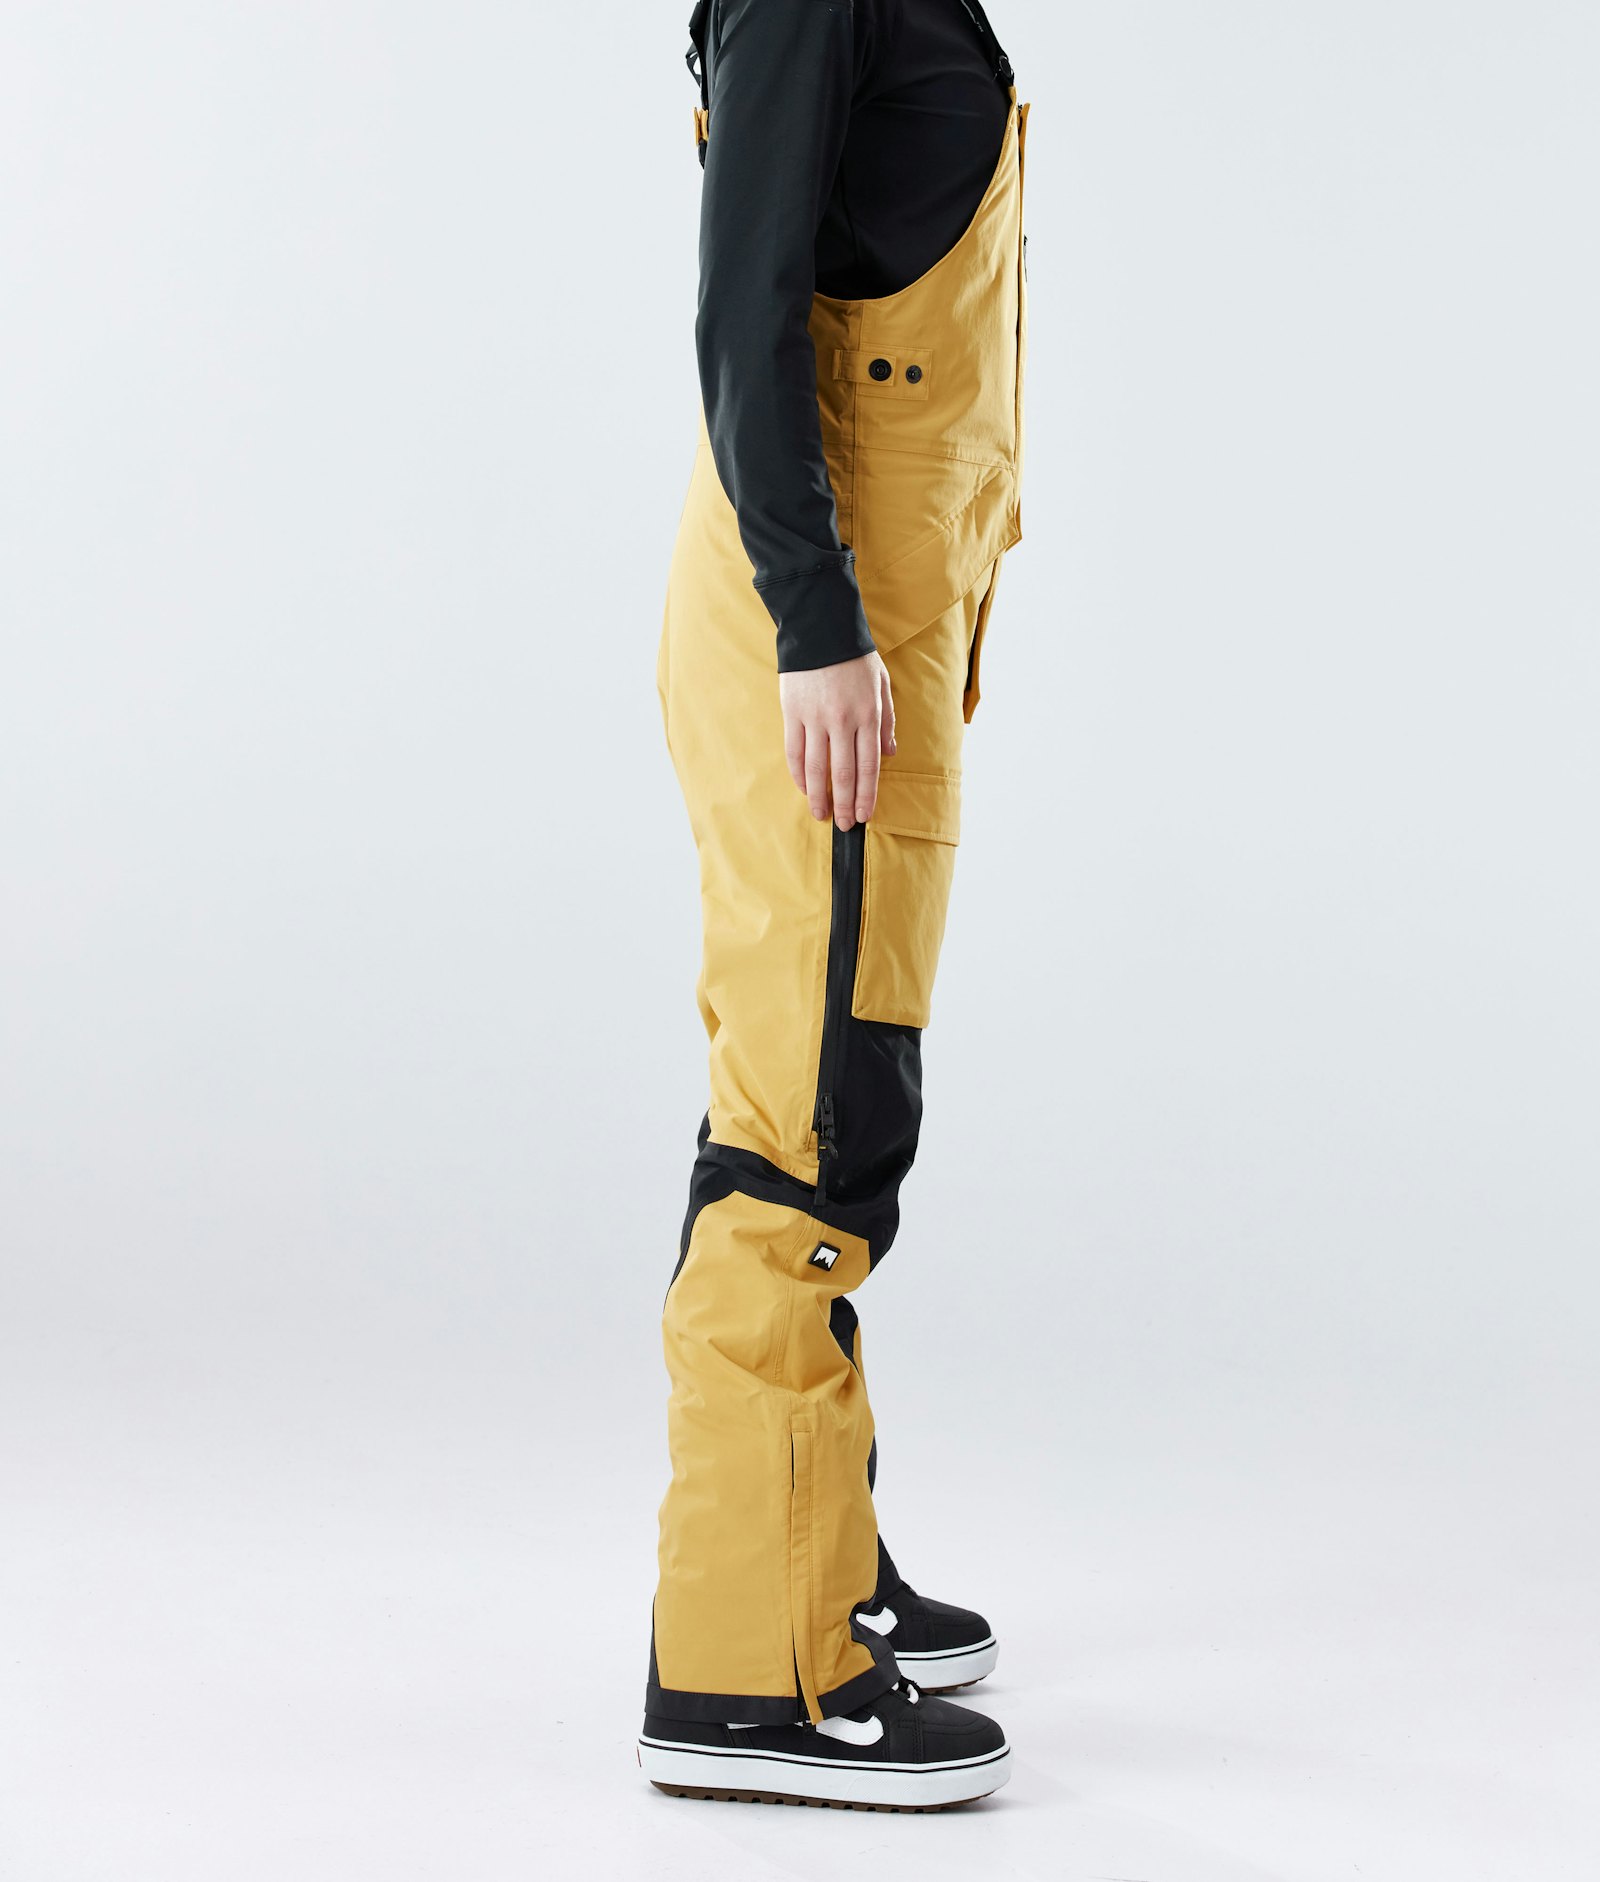 Fawk W 2020 Snowboardhose Damen Yellow/Black